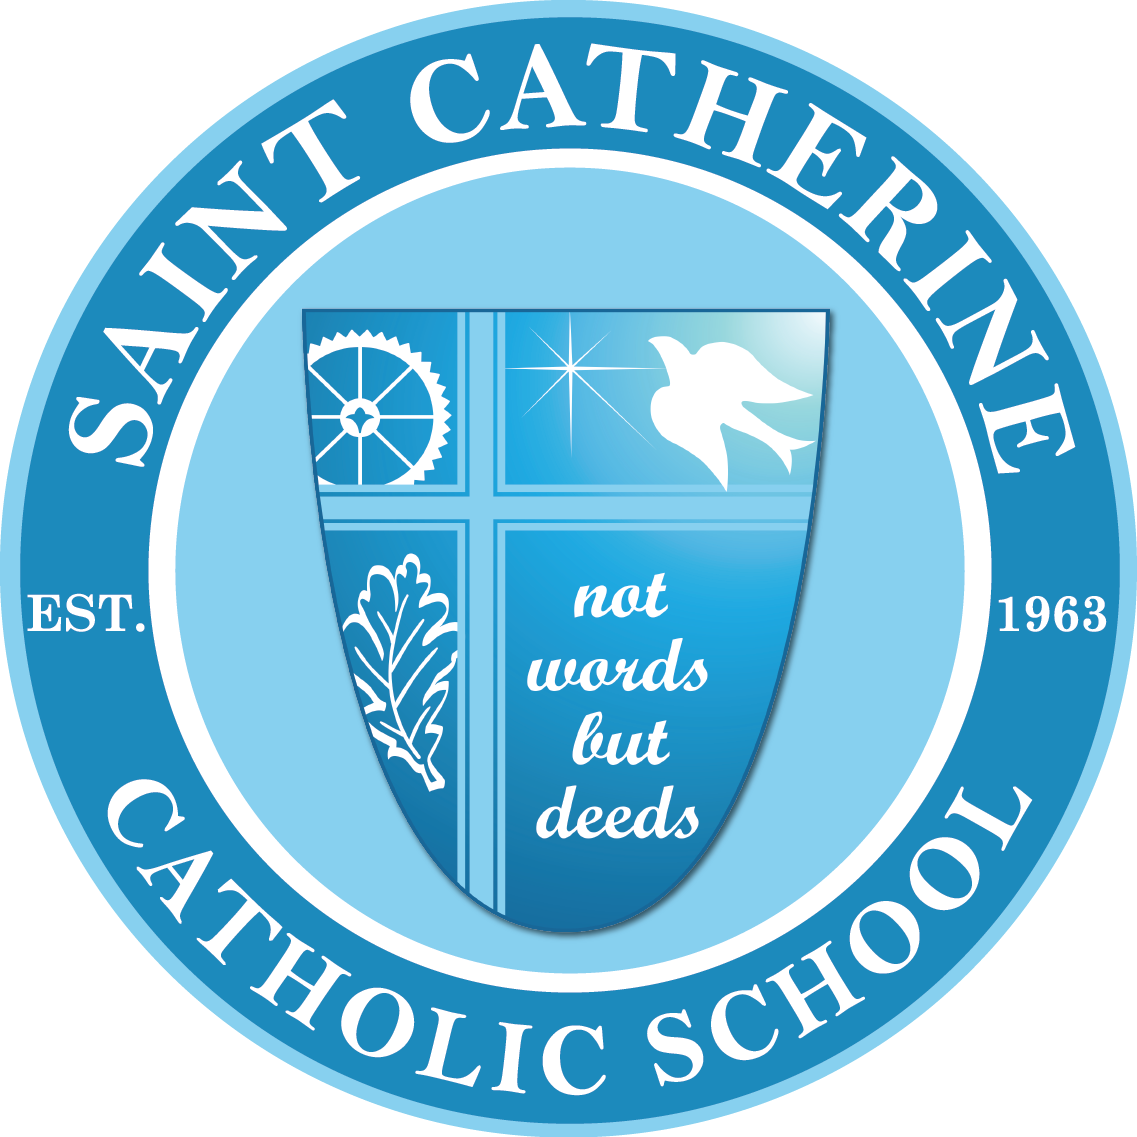 St. Catherine School of Morgan Hill